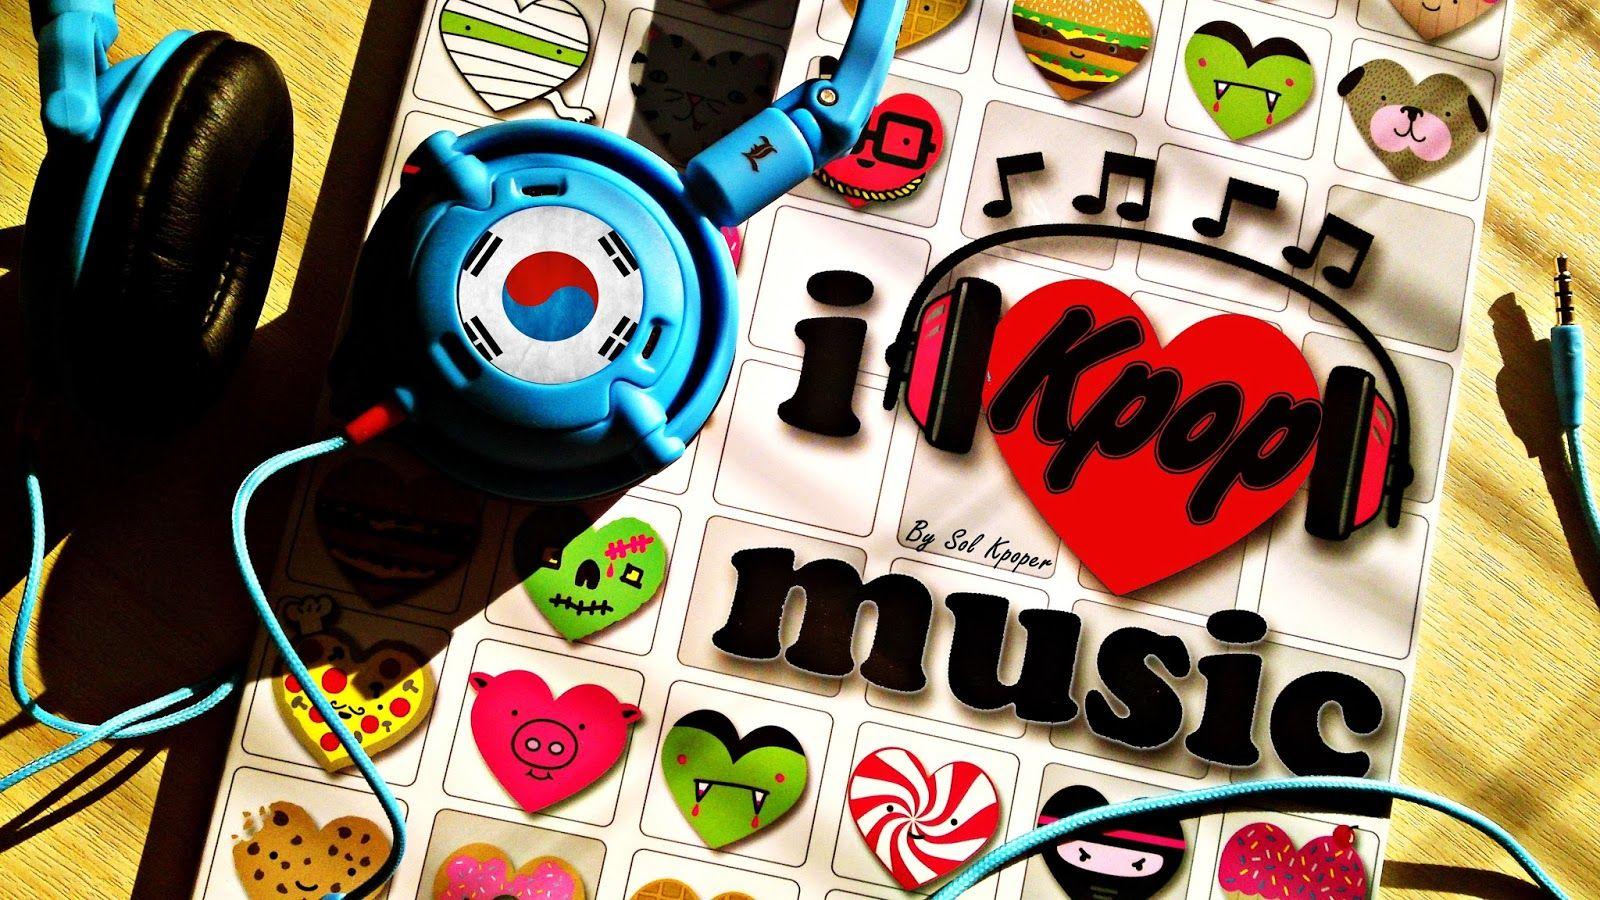 Love Kpop Wallpapers - Top Free Love Kpop Backgrounds - WallpaperAccess